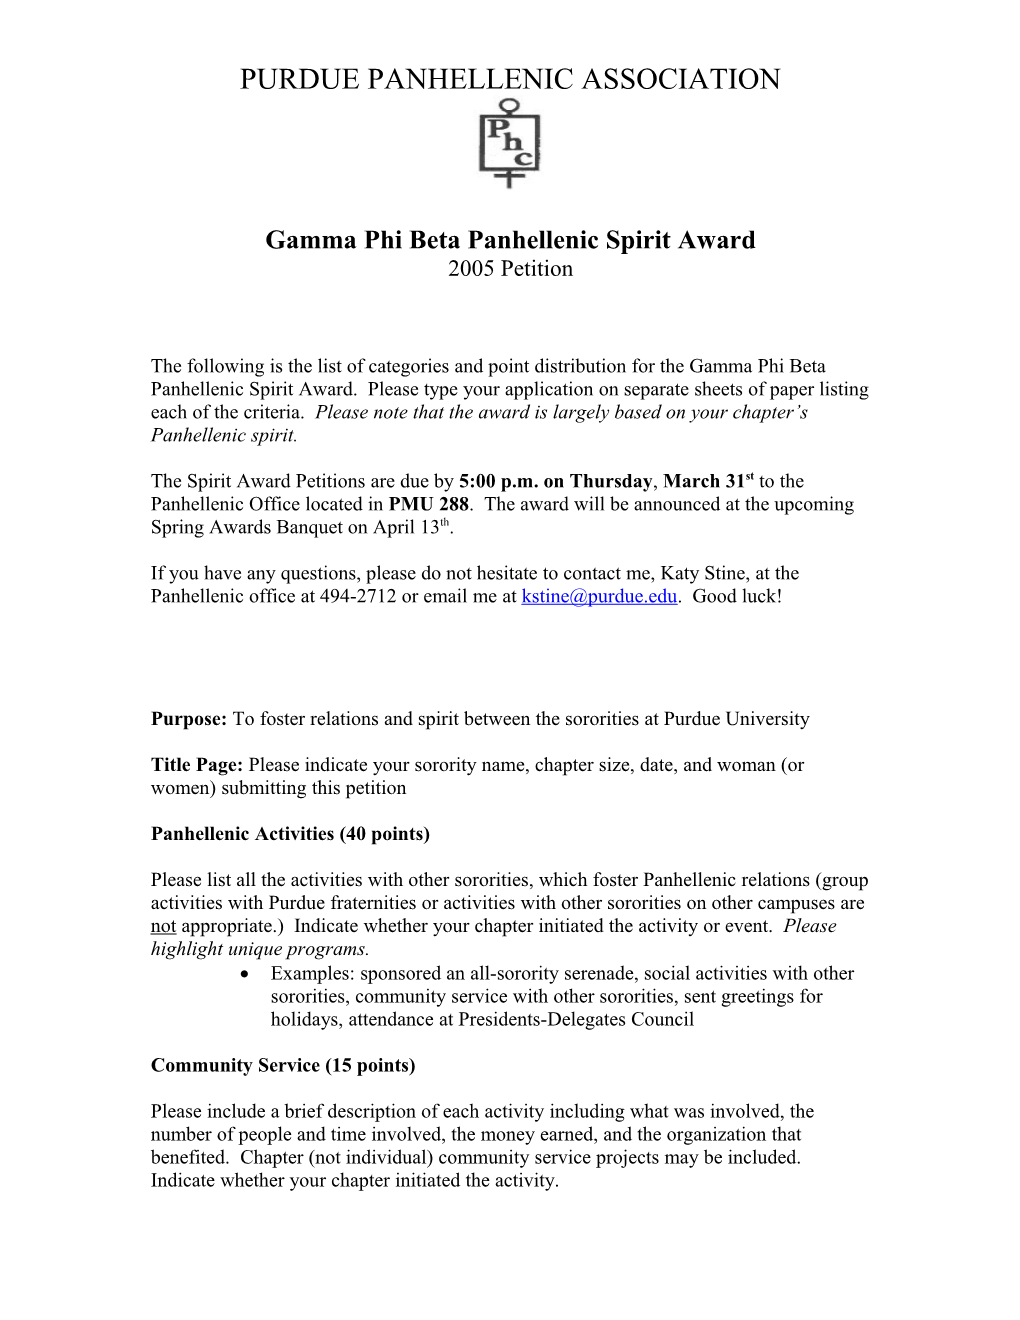 Gamma Phi Beta Panhellenic Spirit Award